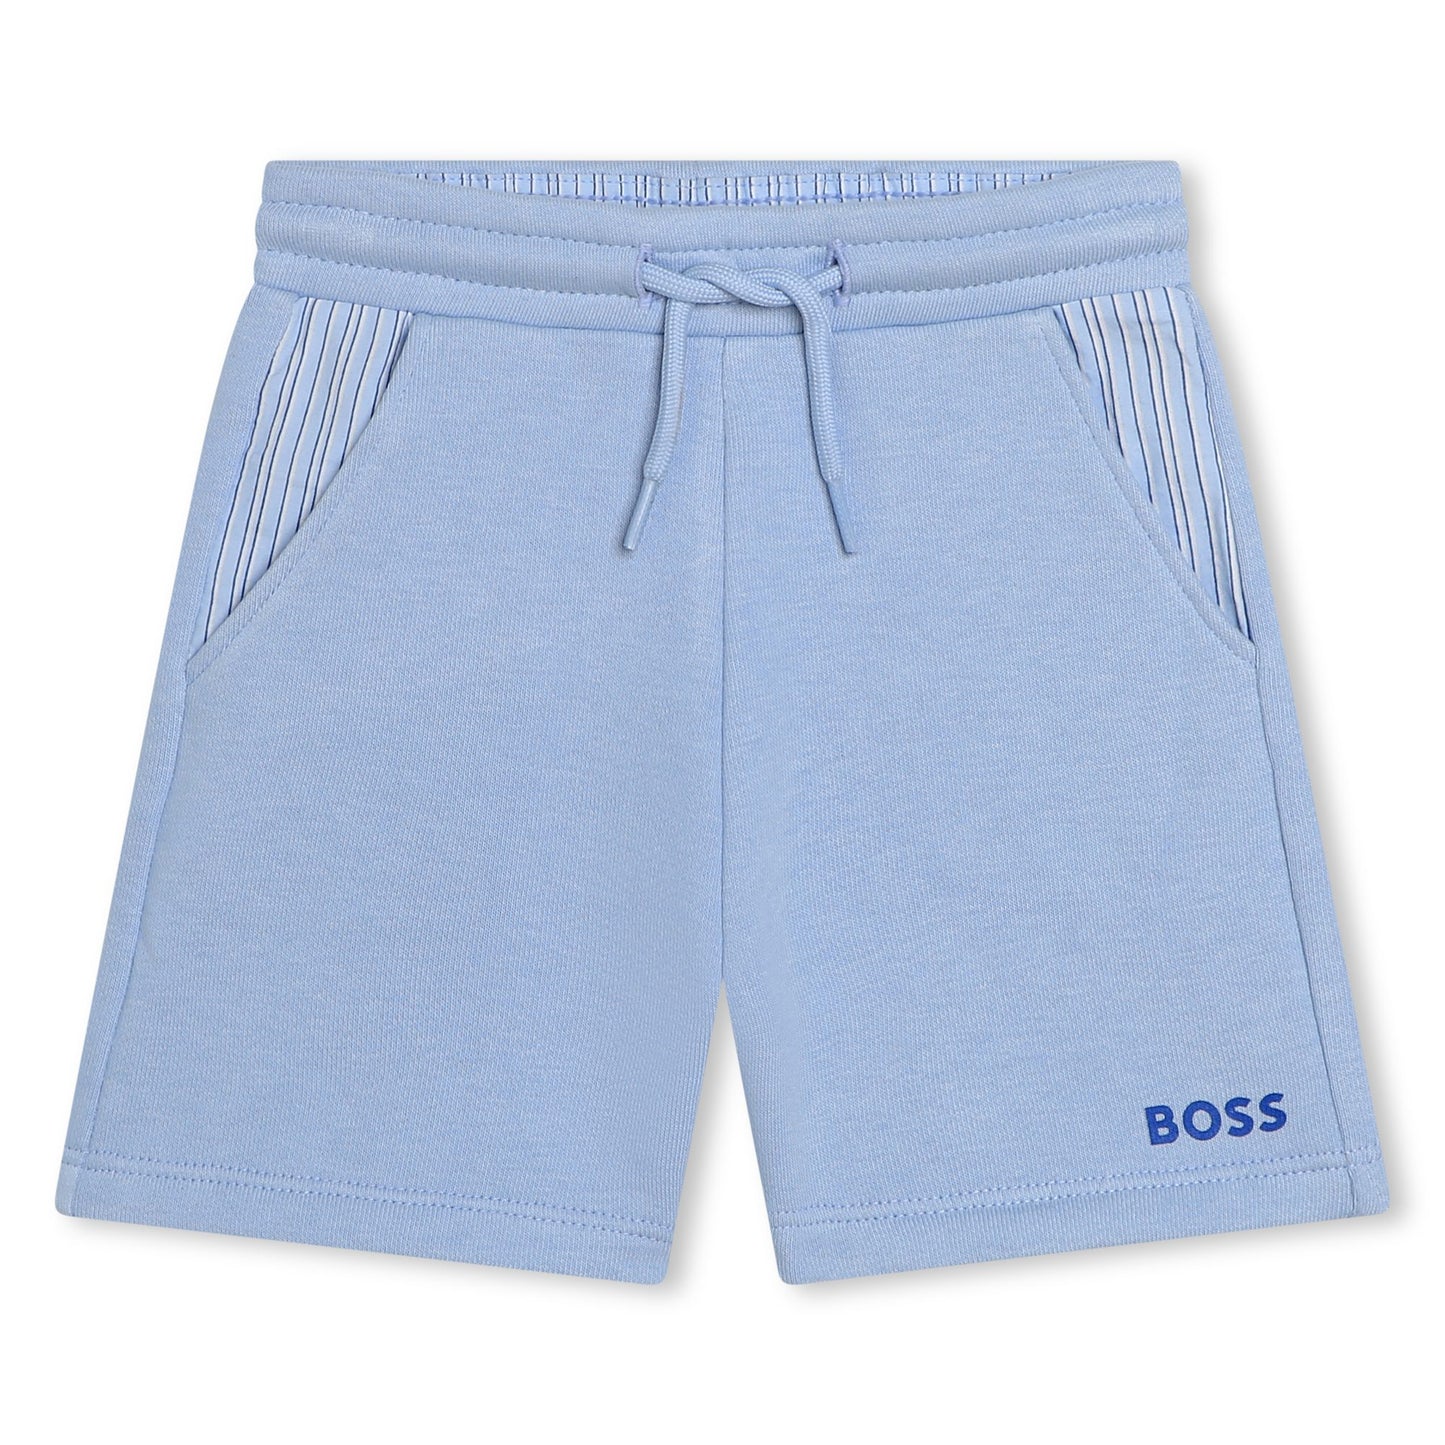 Hugo Boss Baby Boy's White & Blue Cotton T-Shirt Set